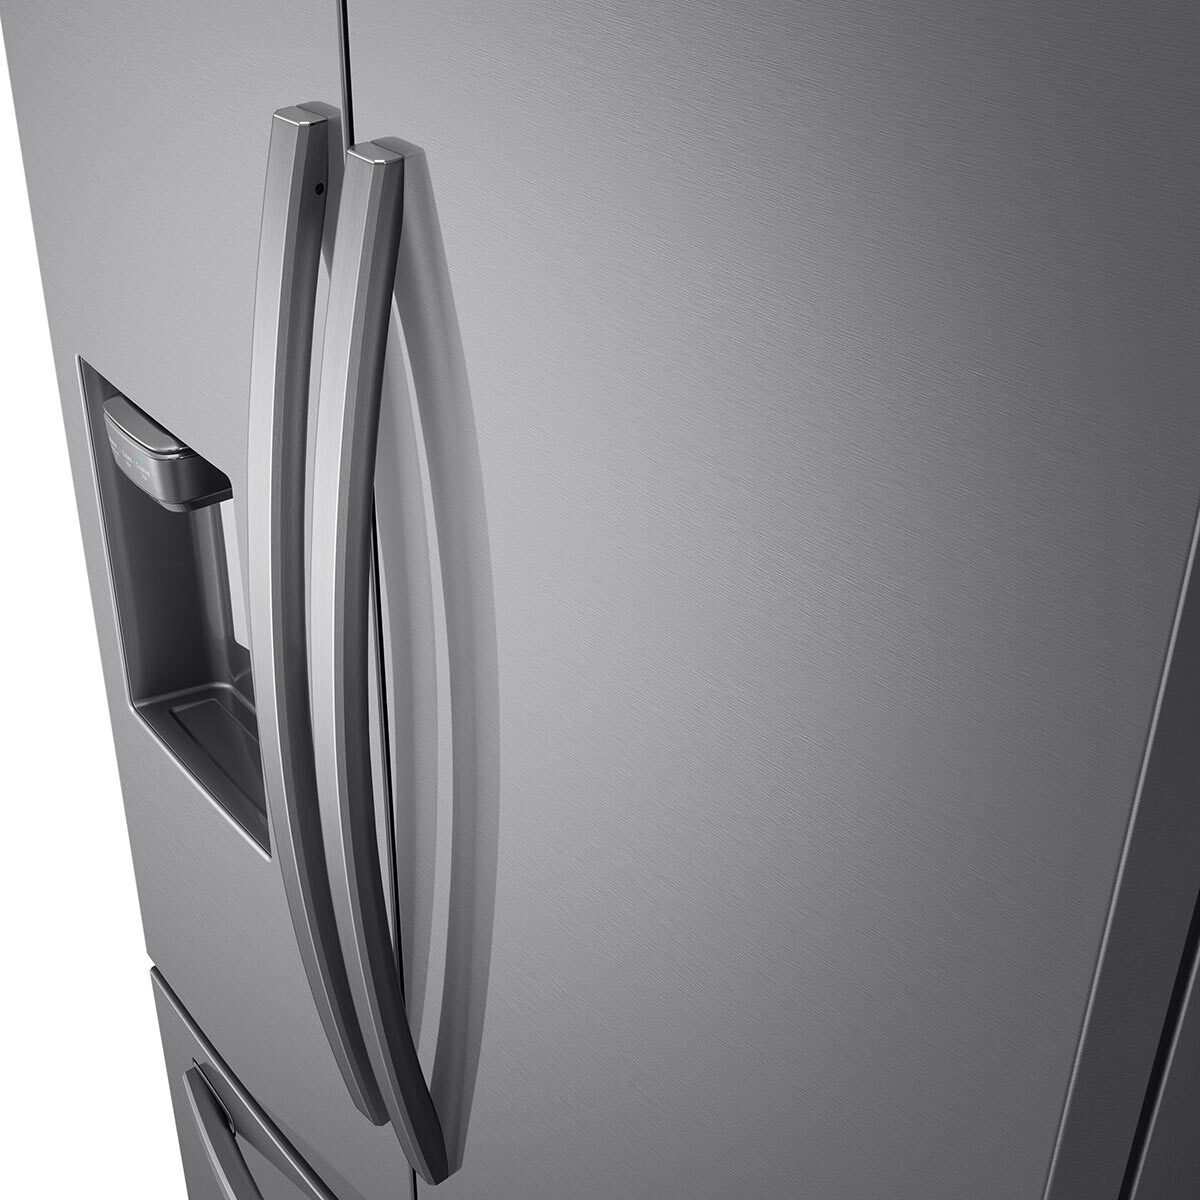 Samsung RF23R62E3SR/EU, Multi-Door Fridge Freezer A+ Rating in Silver - Signature Retail Stores